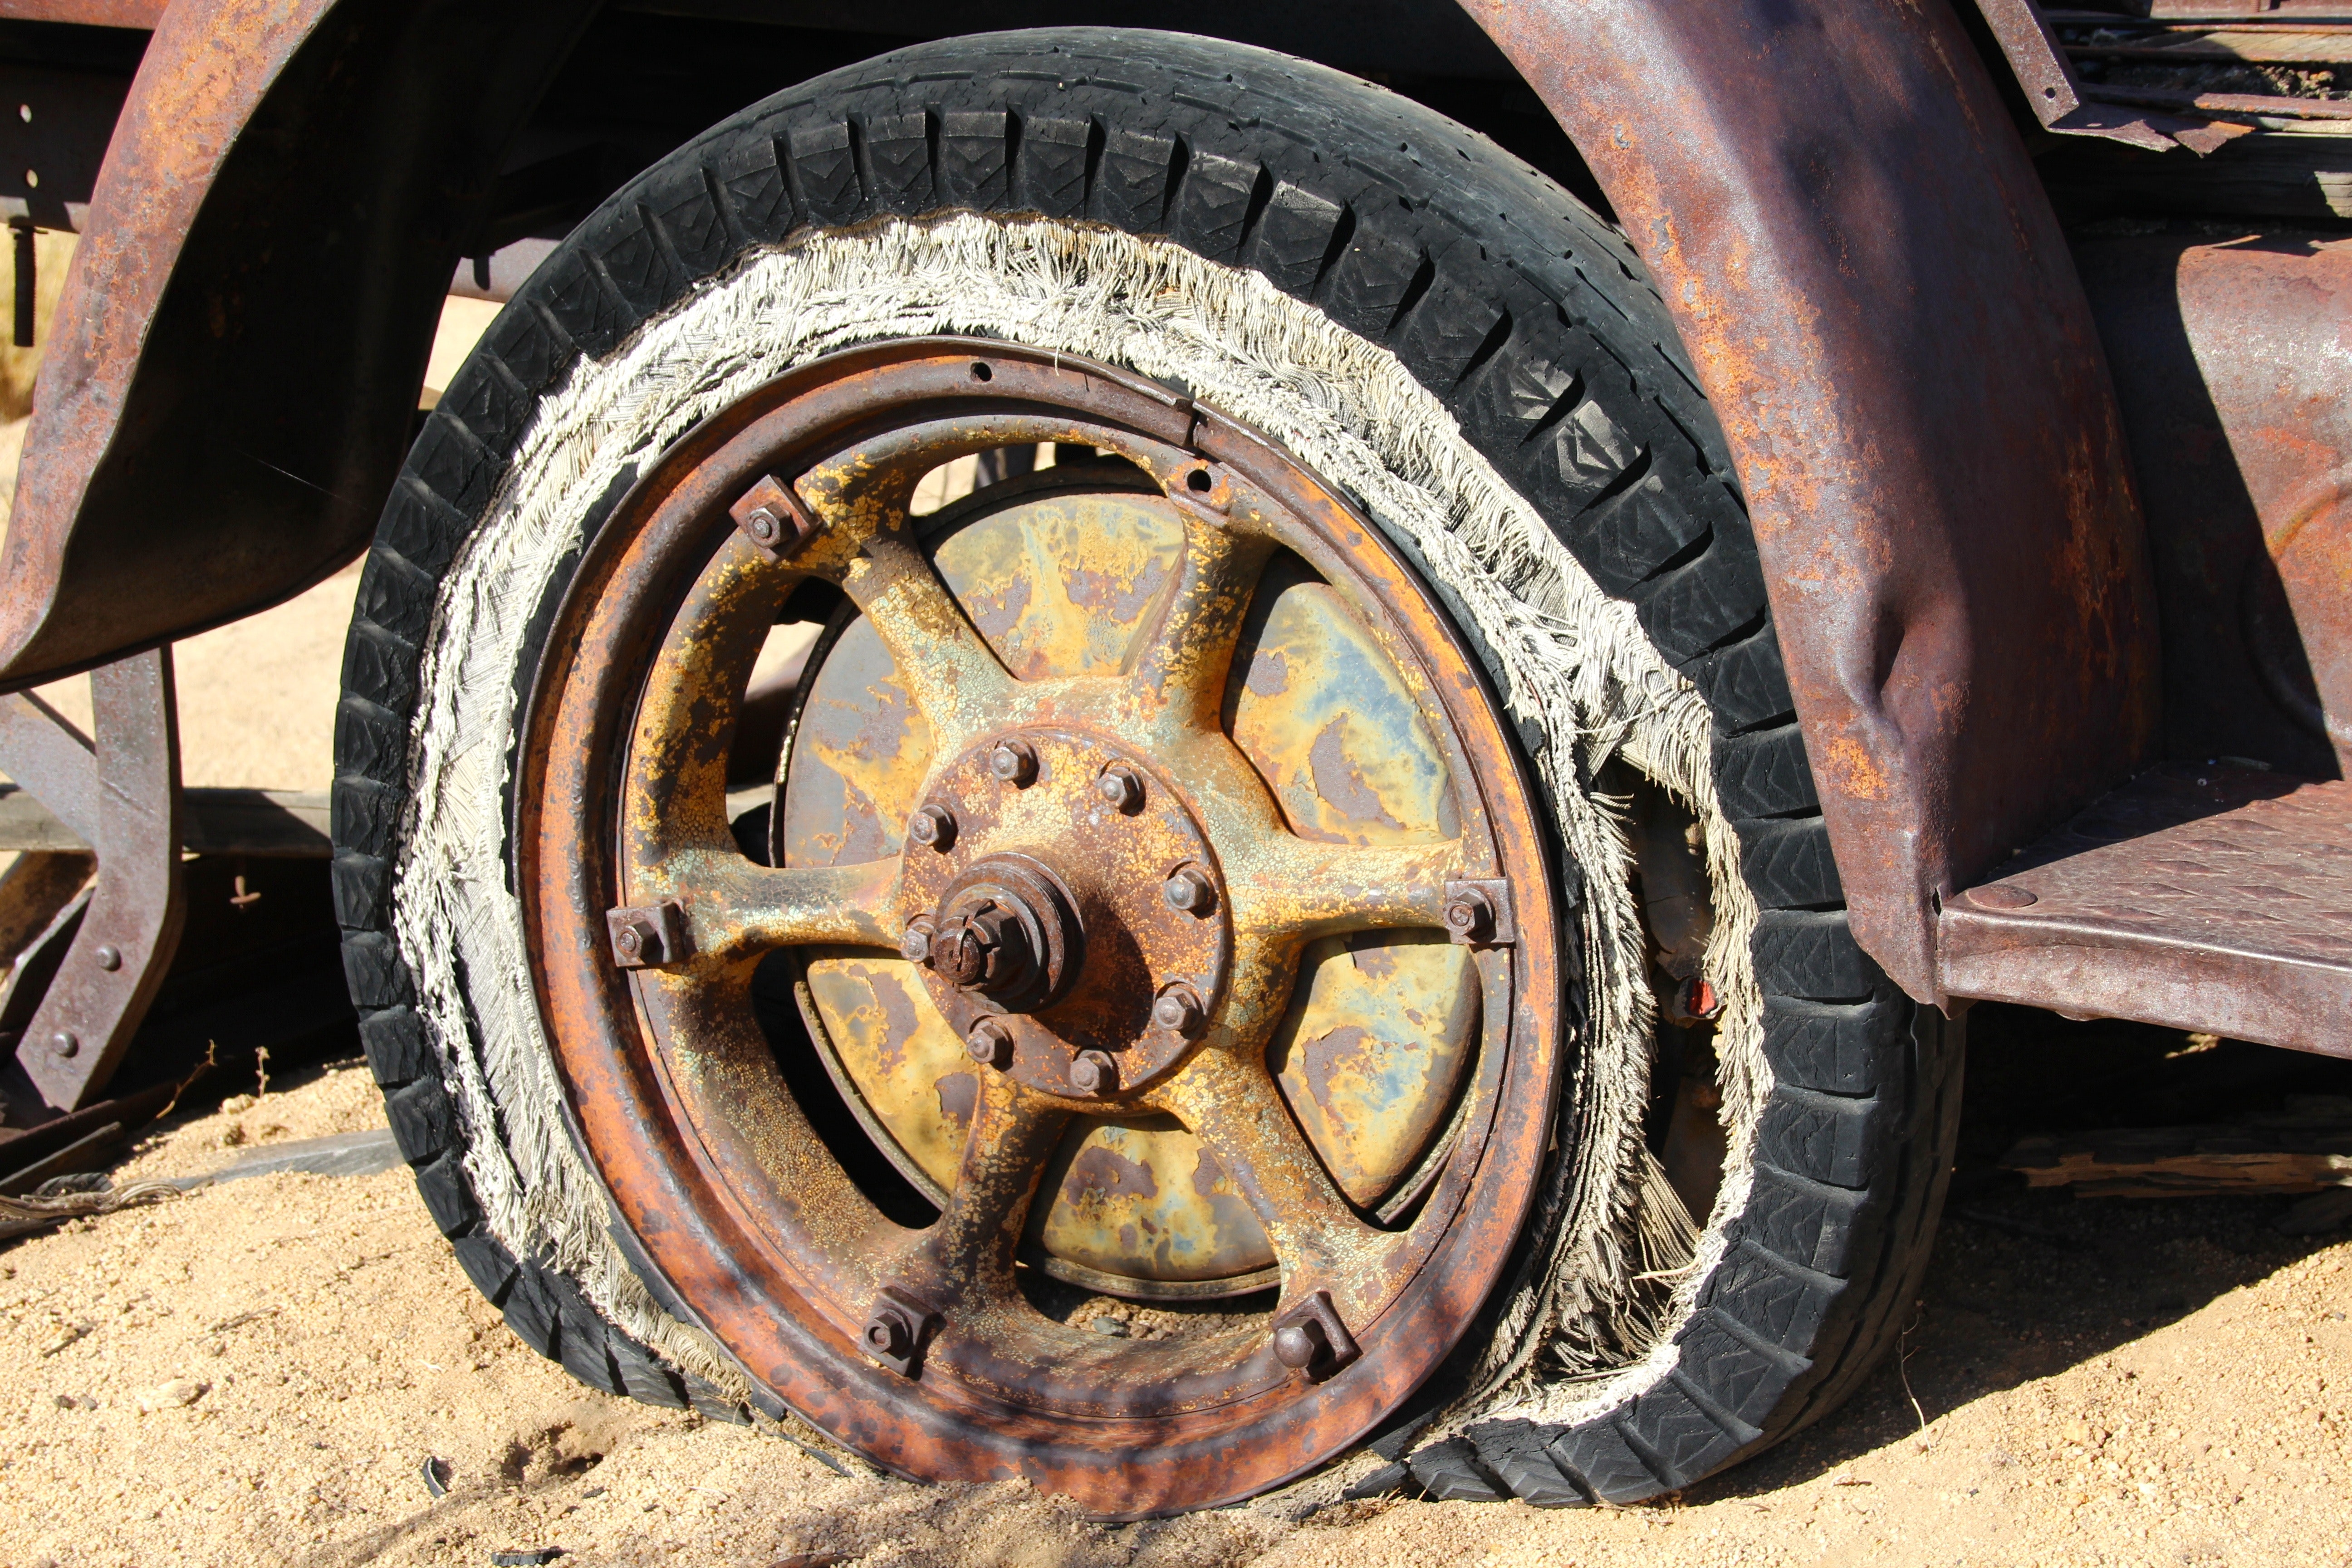 Brown spoke car wheel in brown sand during daytime photo